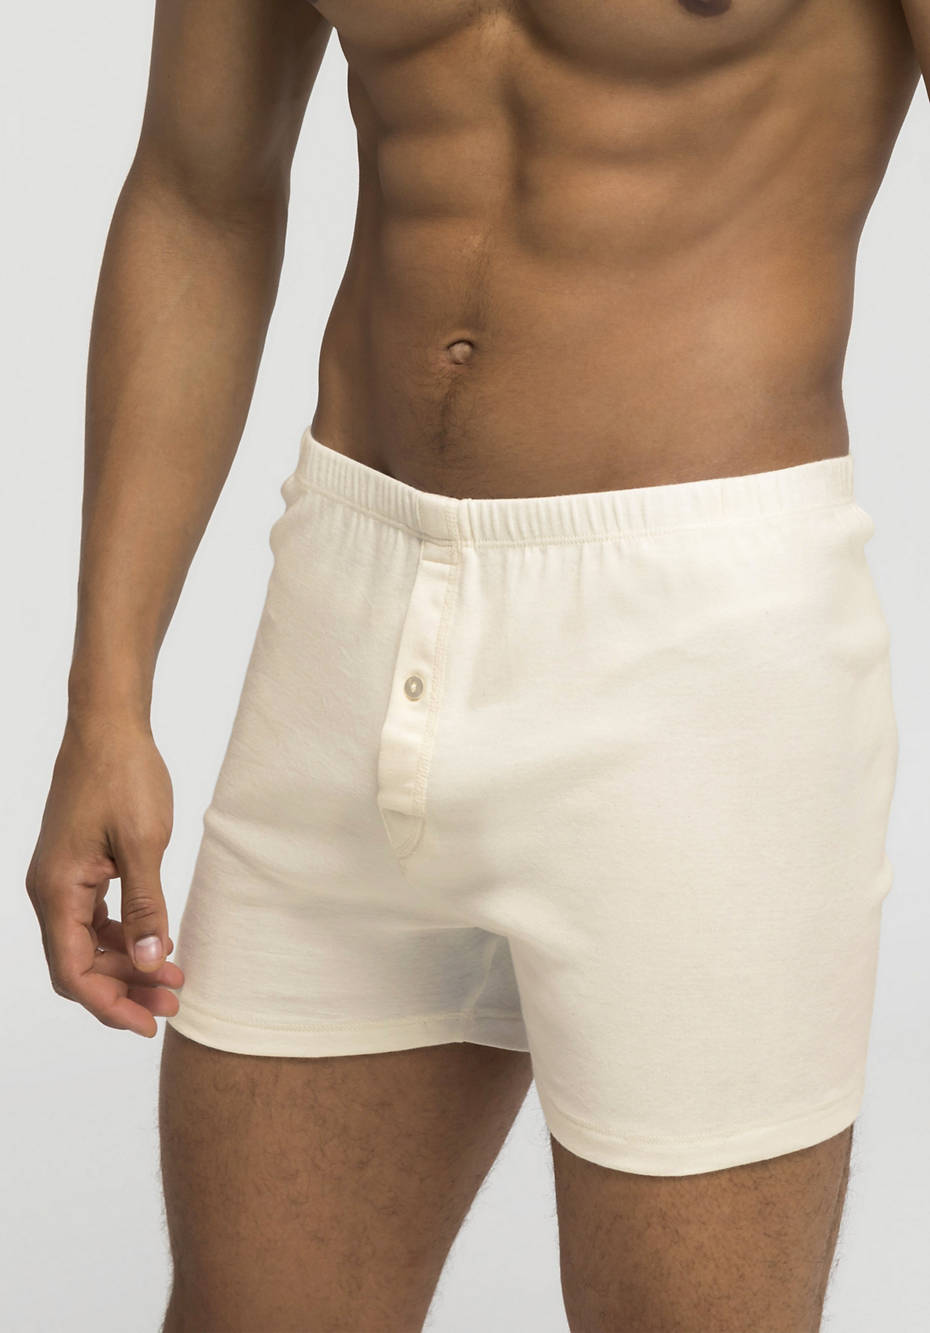 PureNATURE shorts made of pure organic cotton